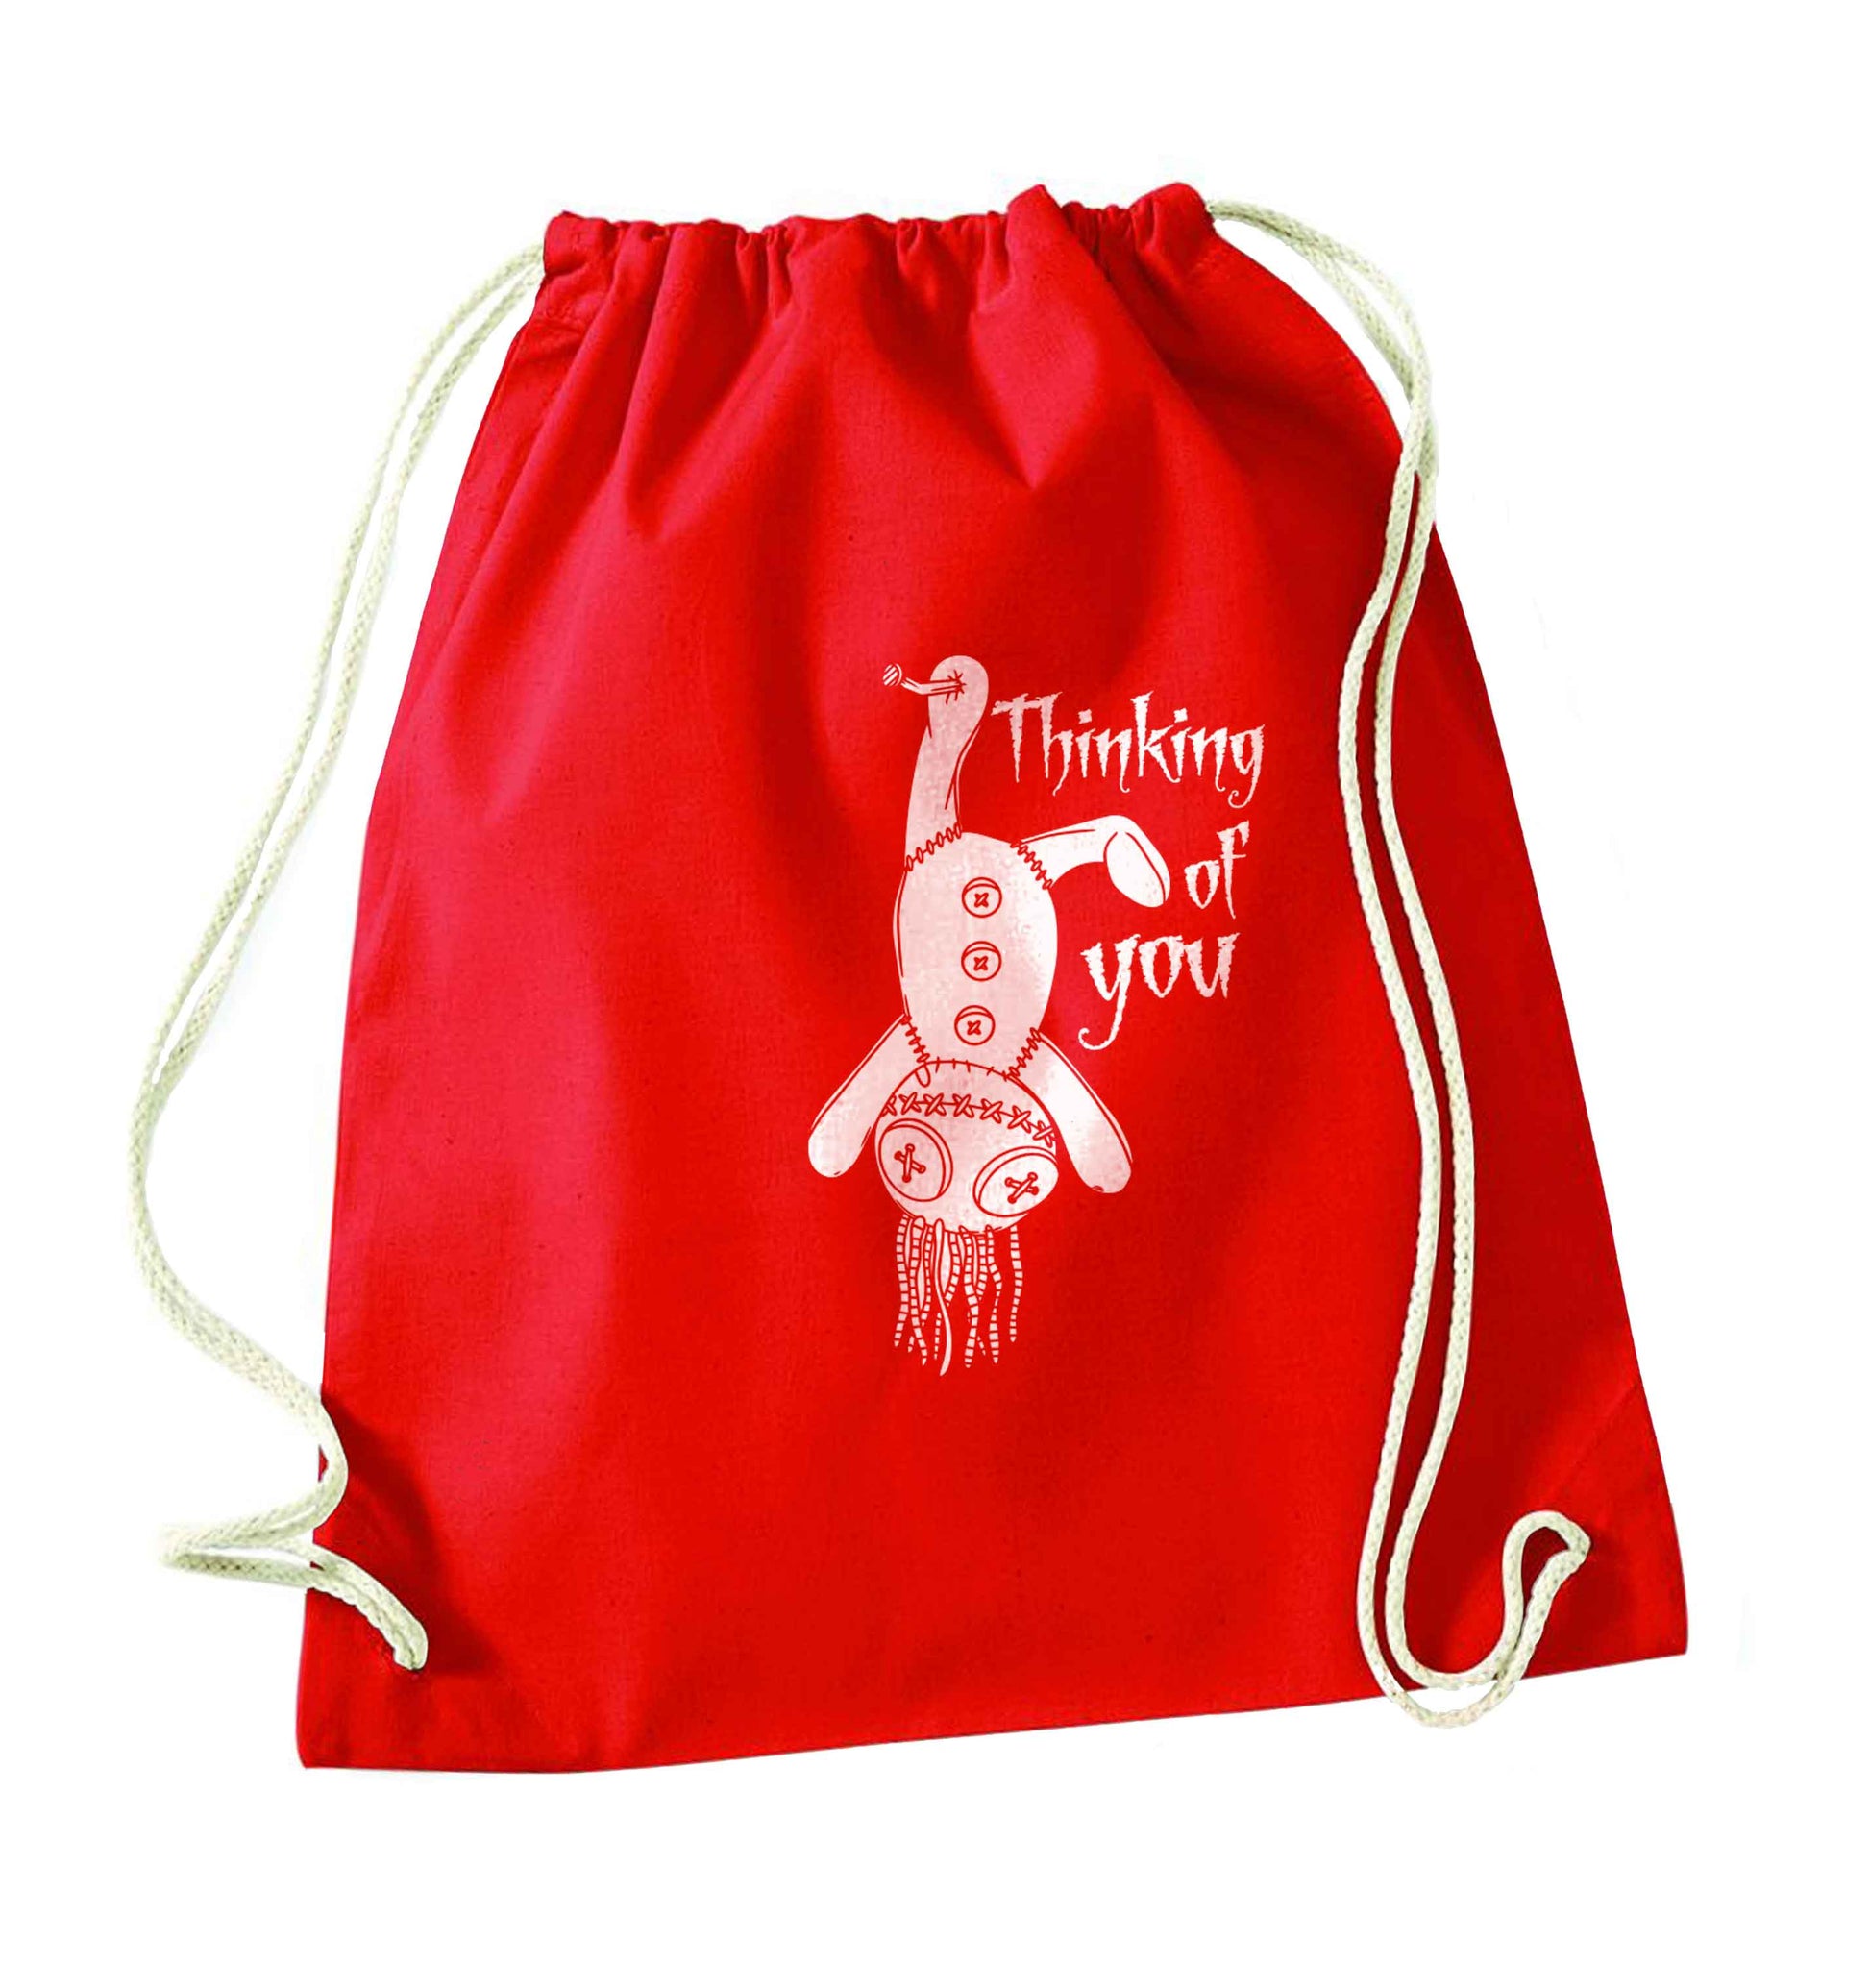 Thinking of you red drawstring bag 